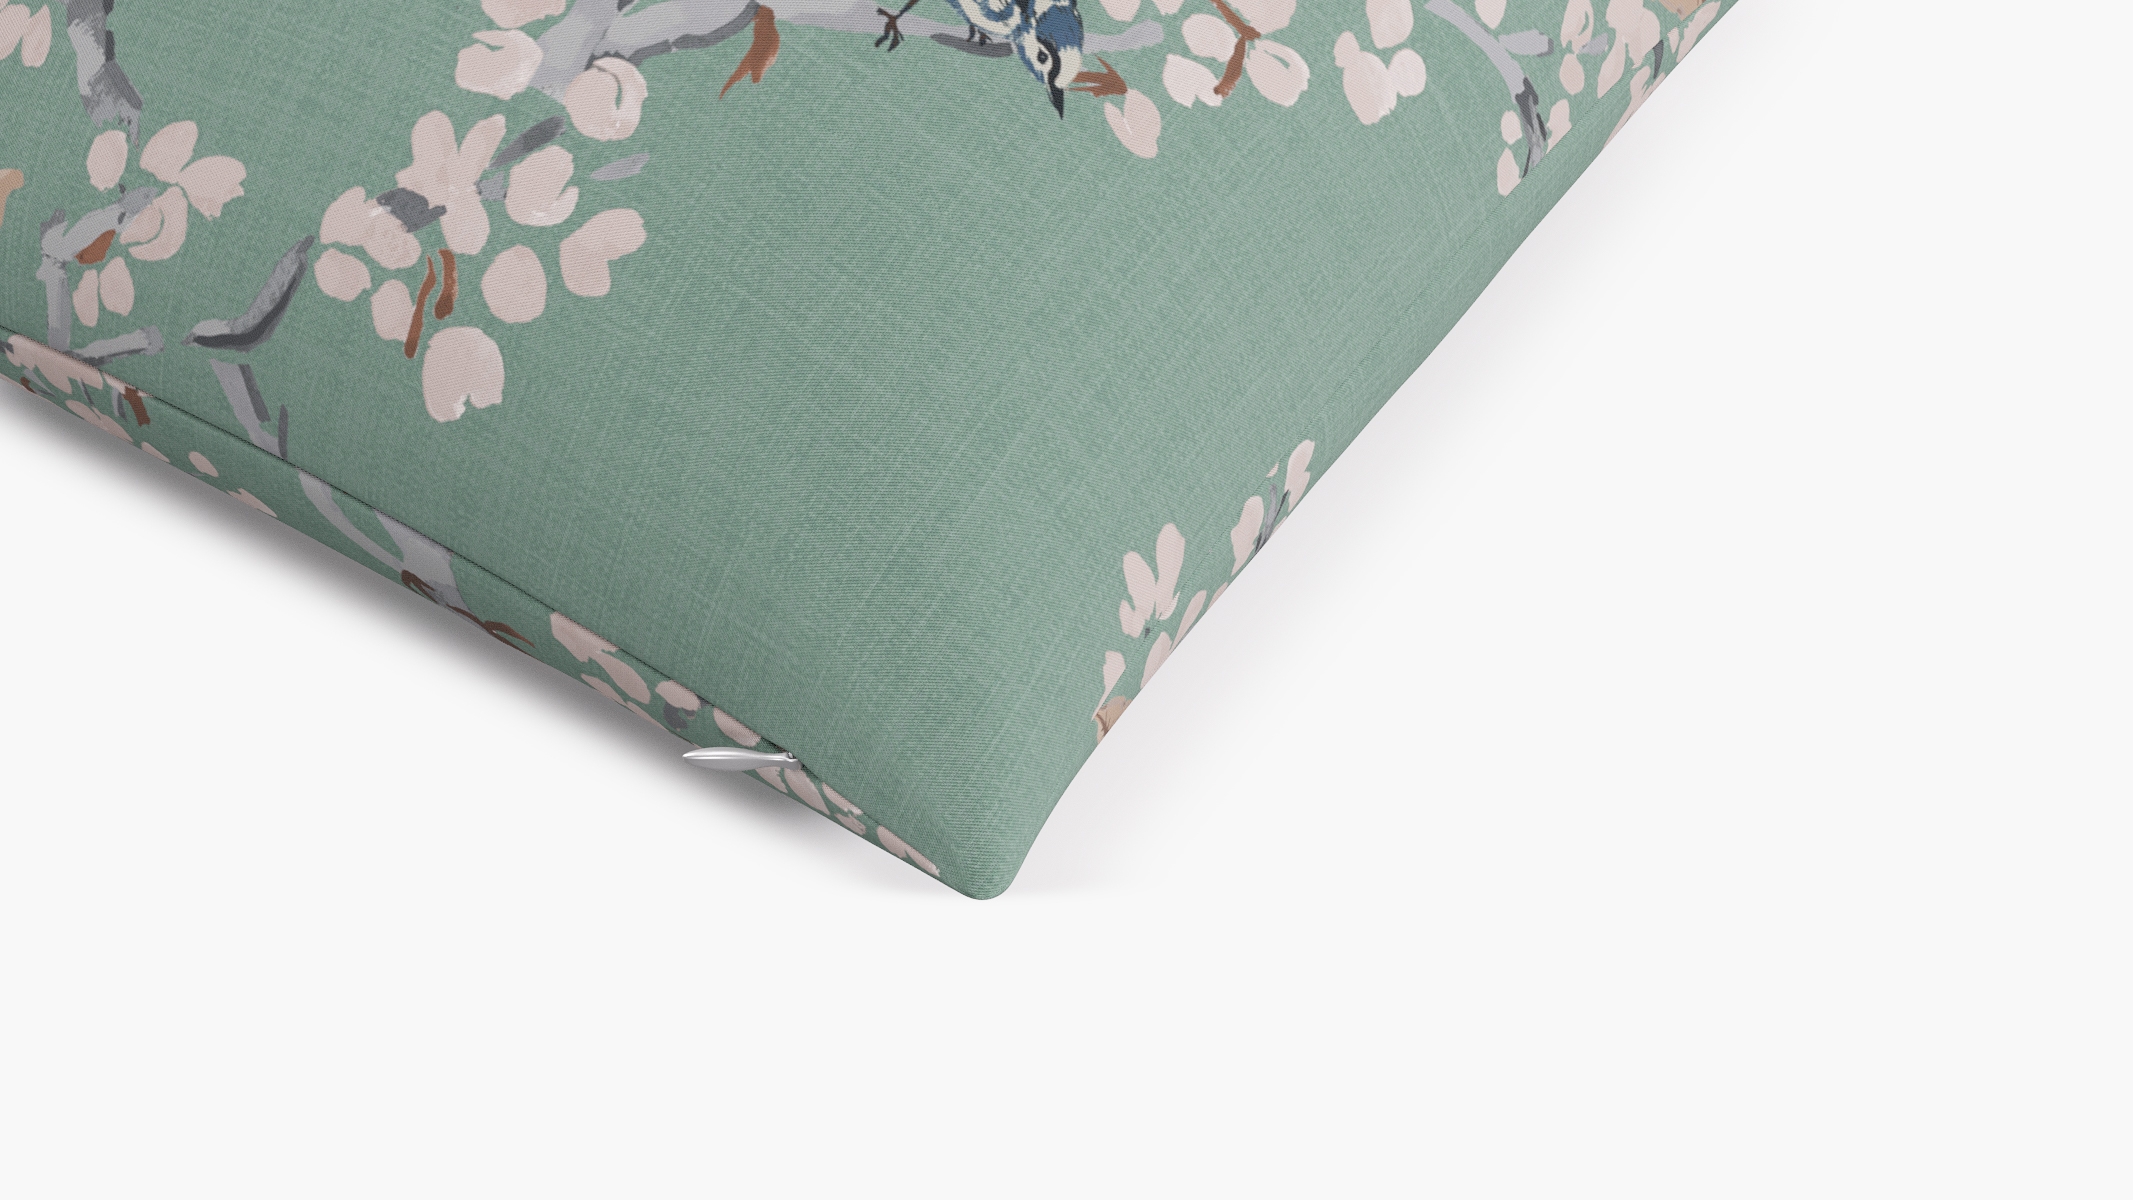 Throw Pillow 18", Mint Cherry Blossom, 18" x 18" - Image 1